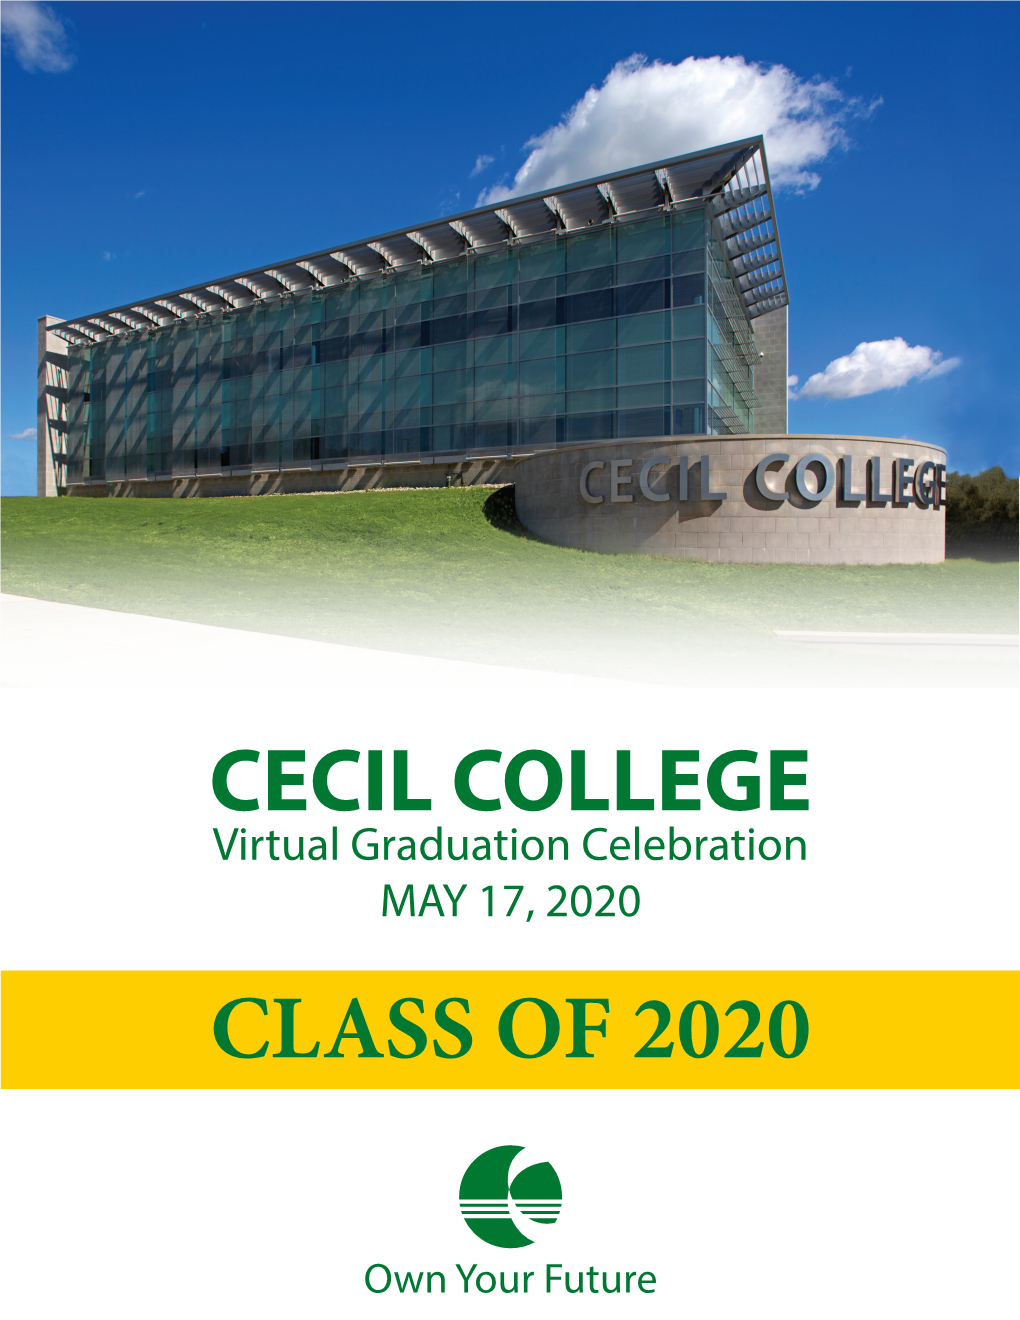 Cecil College Class of 2020